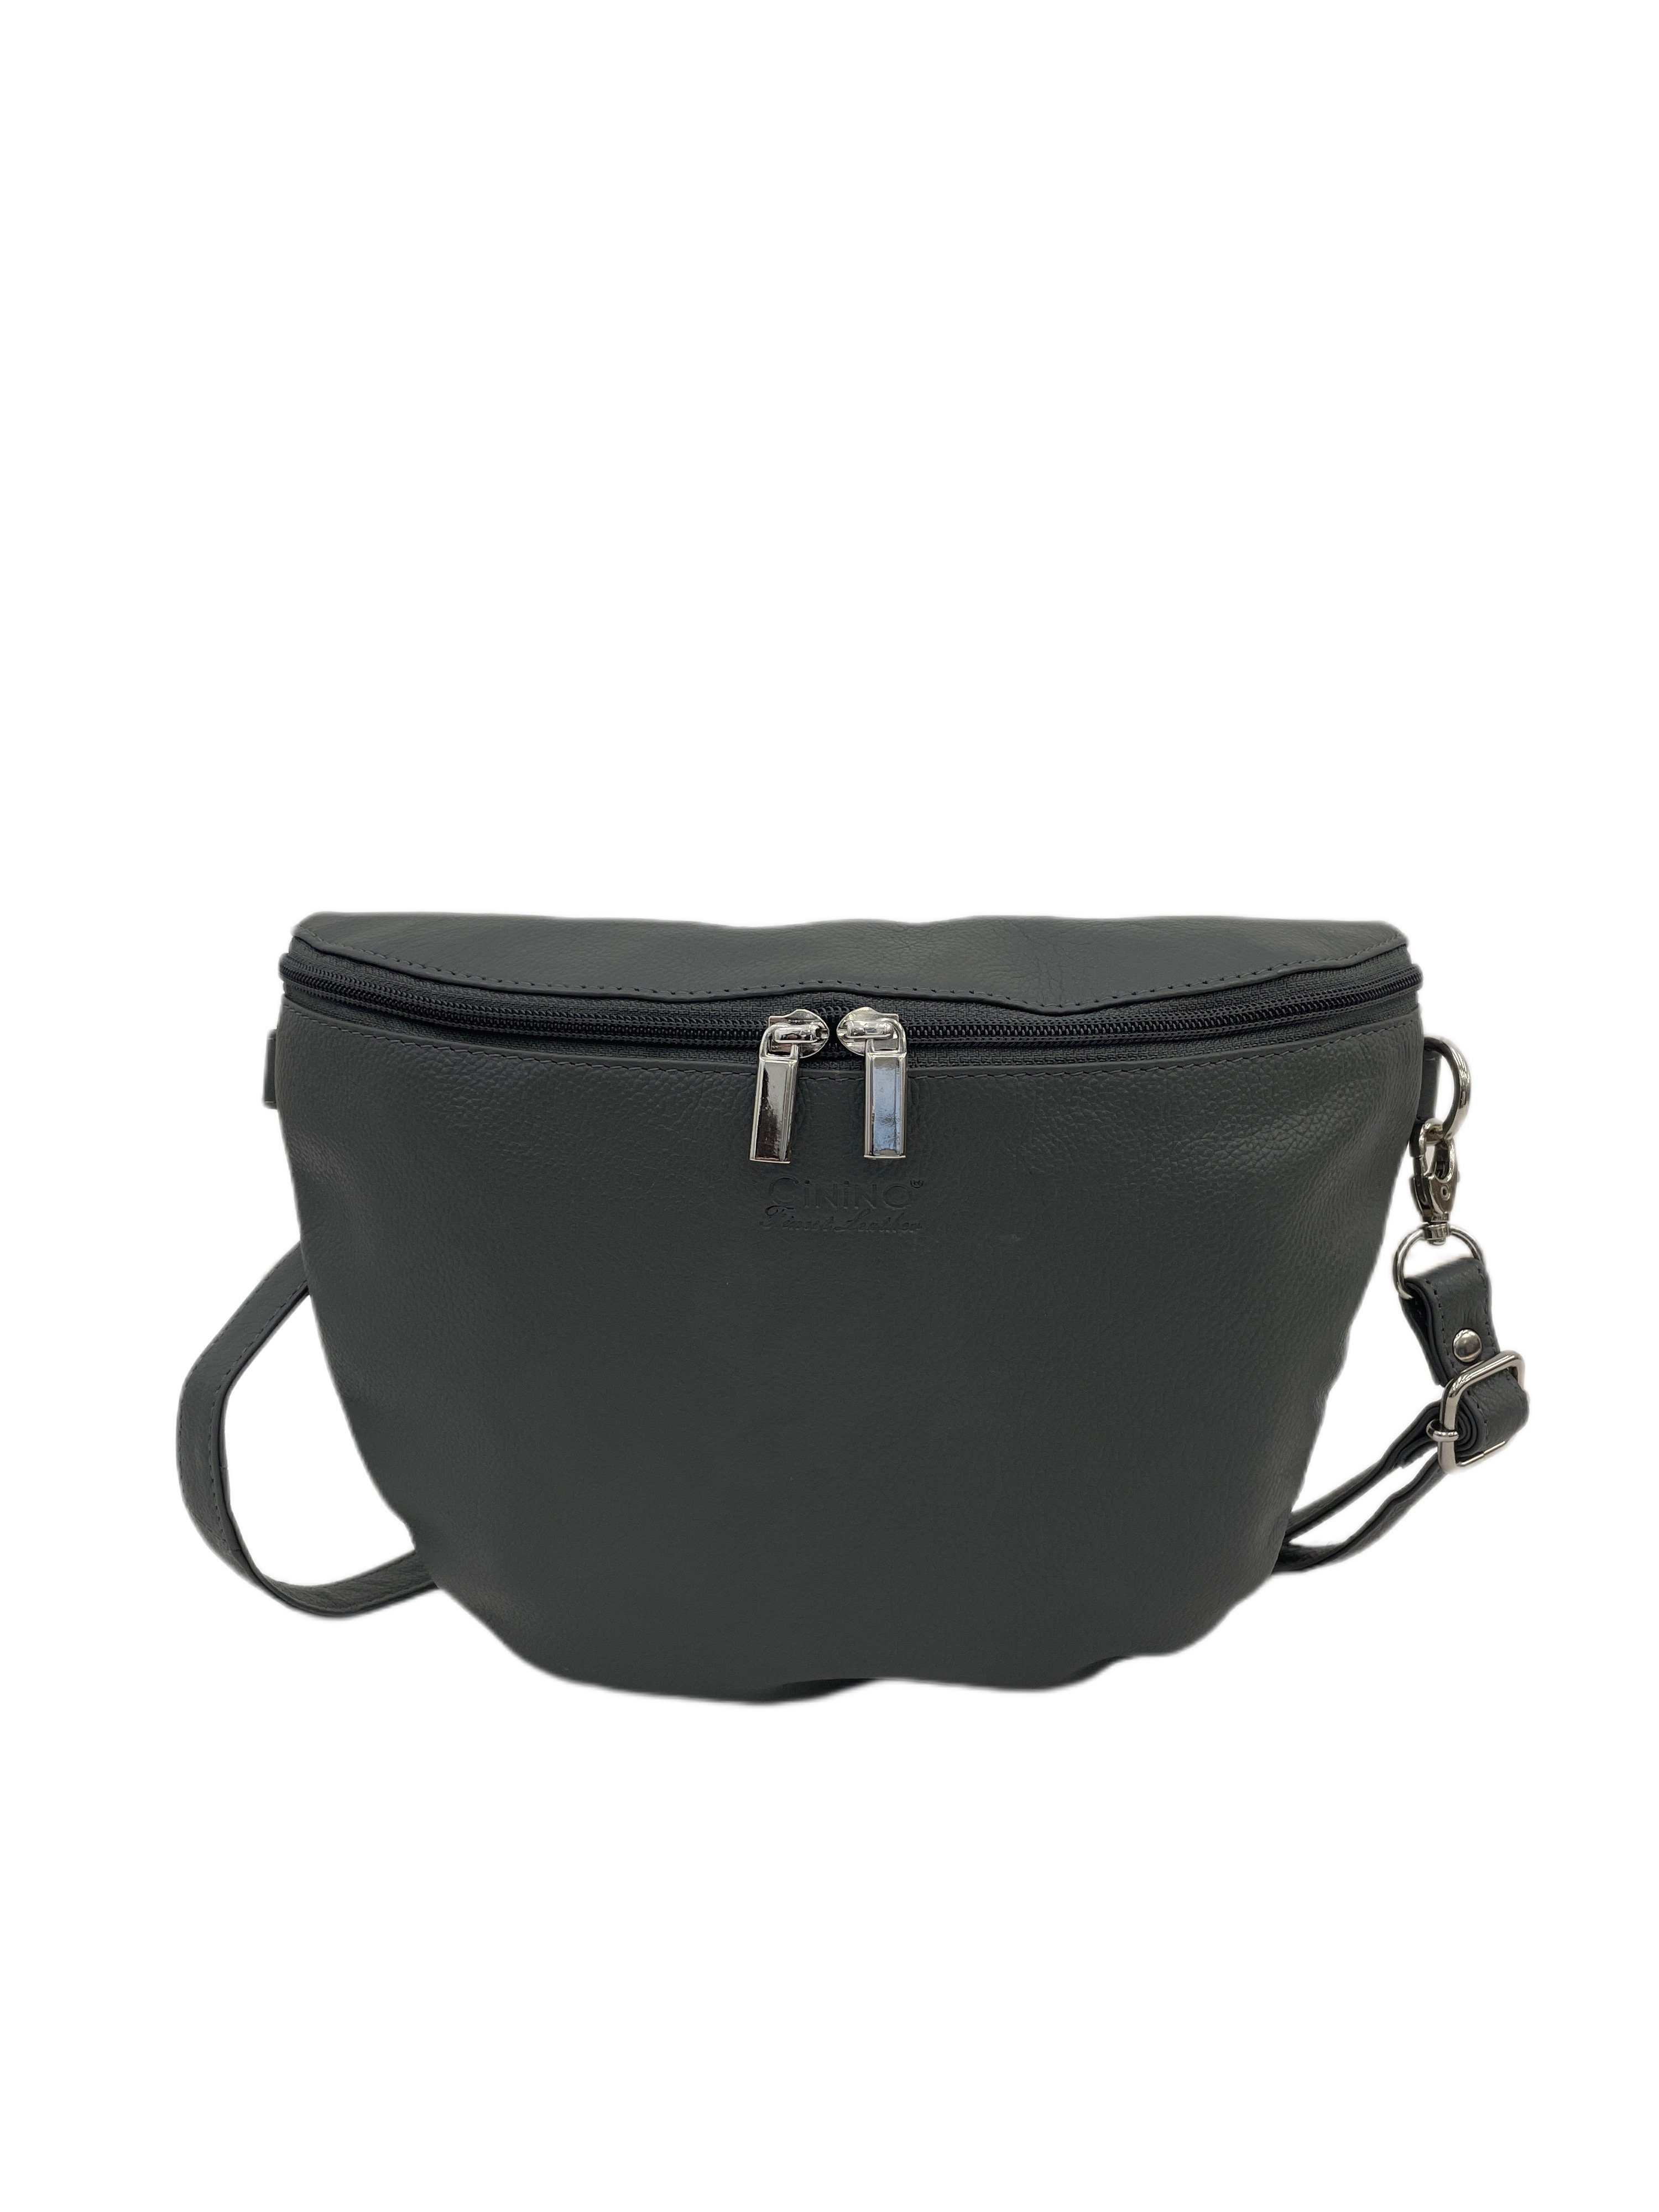 Cinino Handtasche PINA, Bauchtasche Ledertasche mit abnehmbaren Lederriemen Dunkel Grau | Handtaschen